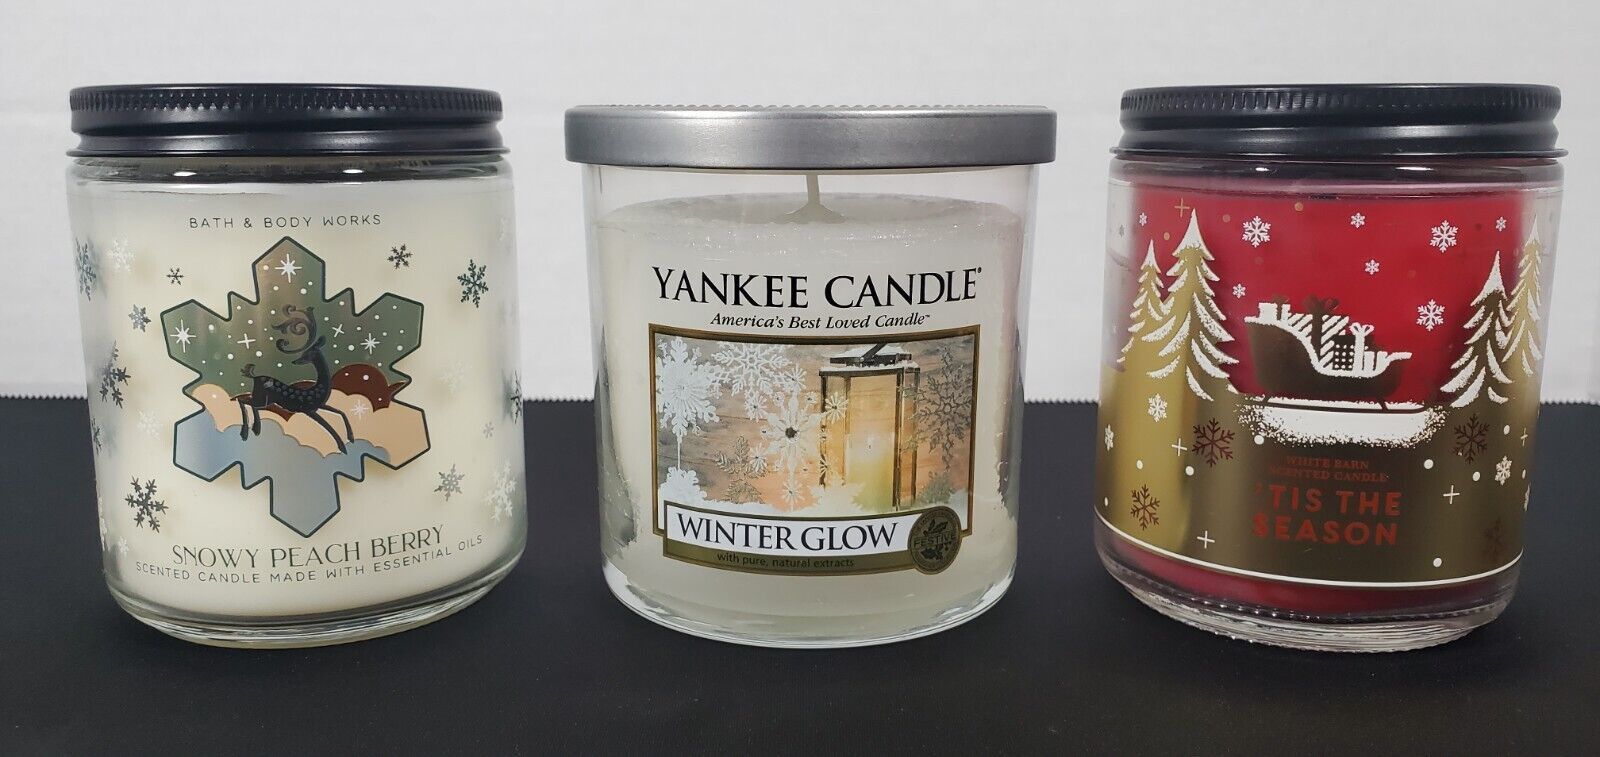 Bath & Body Works & Yankee Candle  Winter/Seasonal Candles - Lot of 3! - $33.85